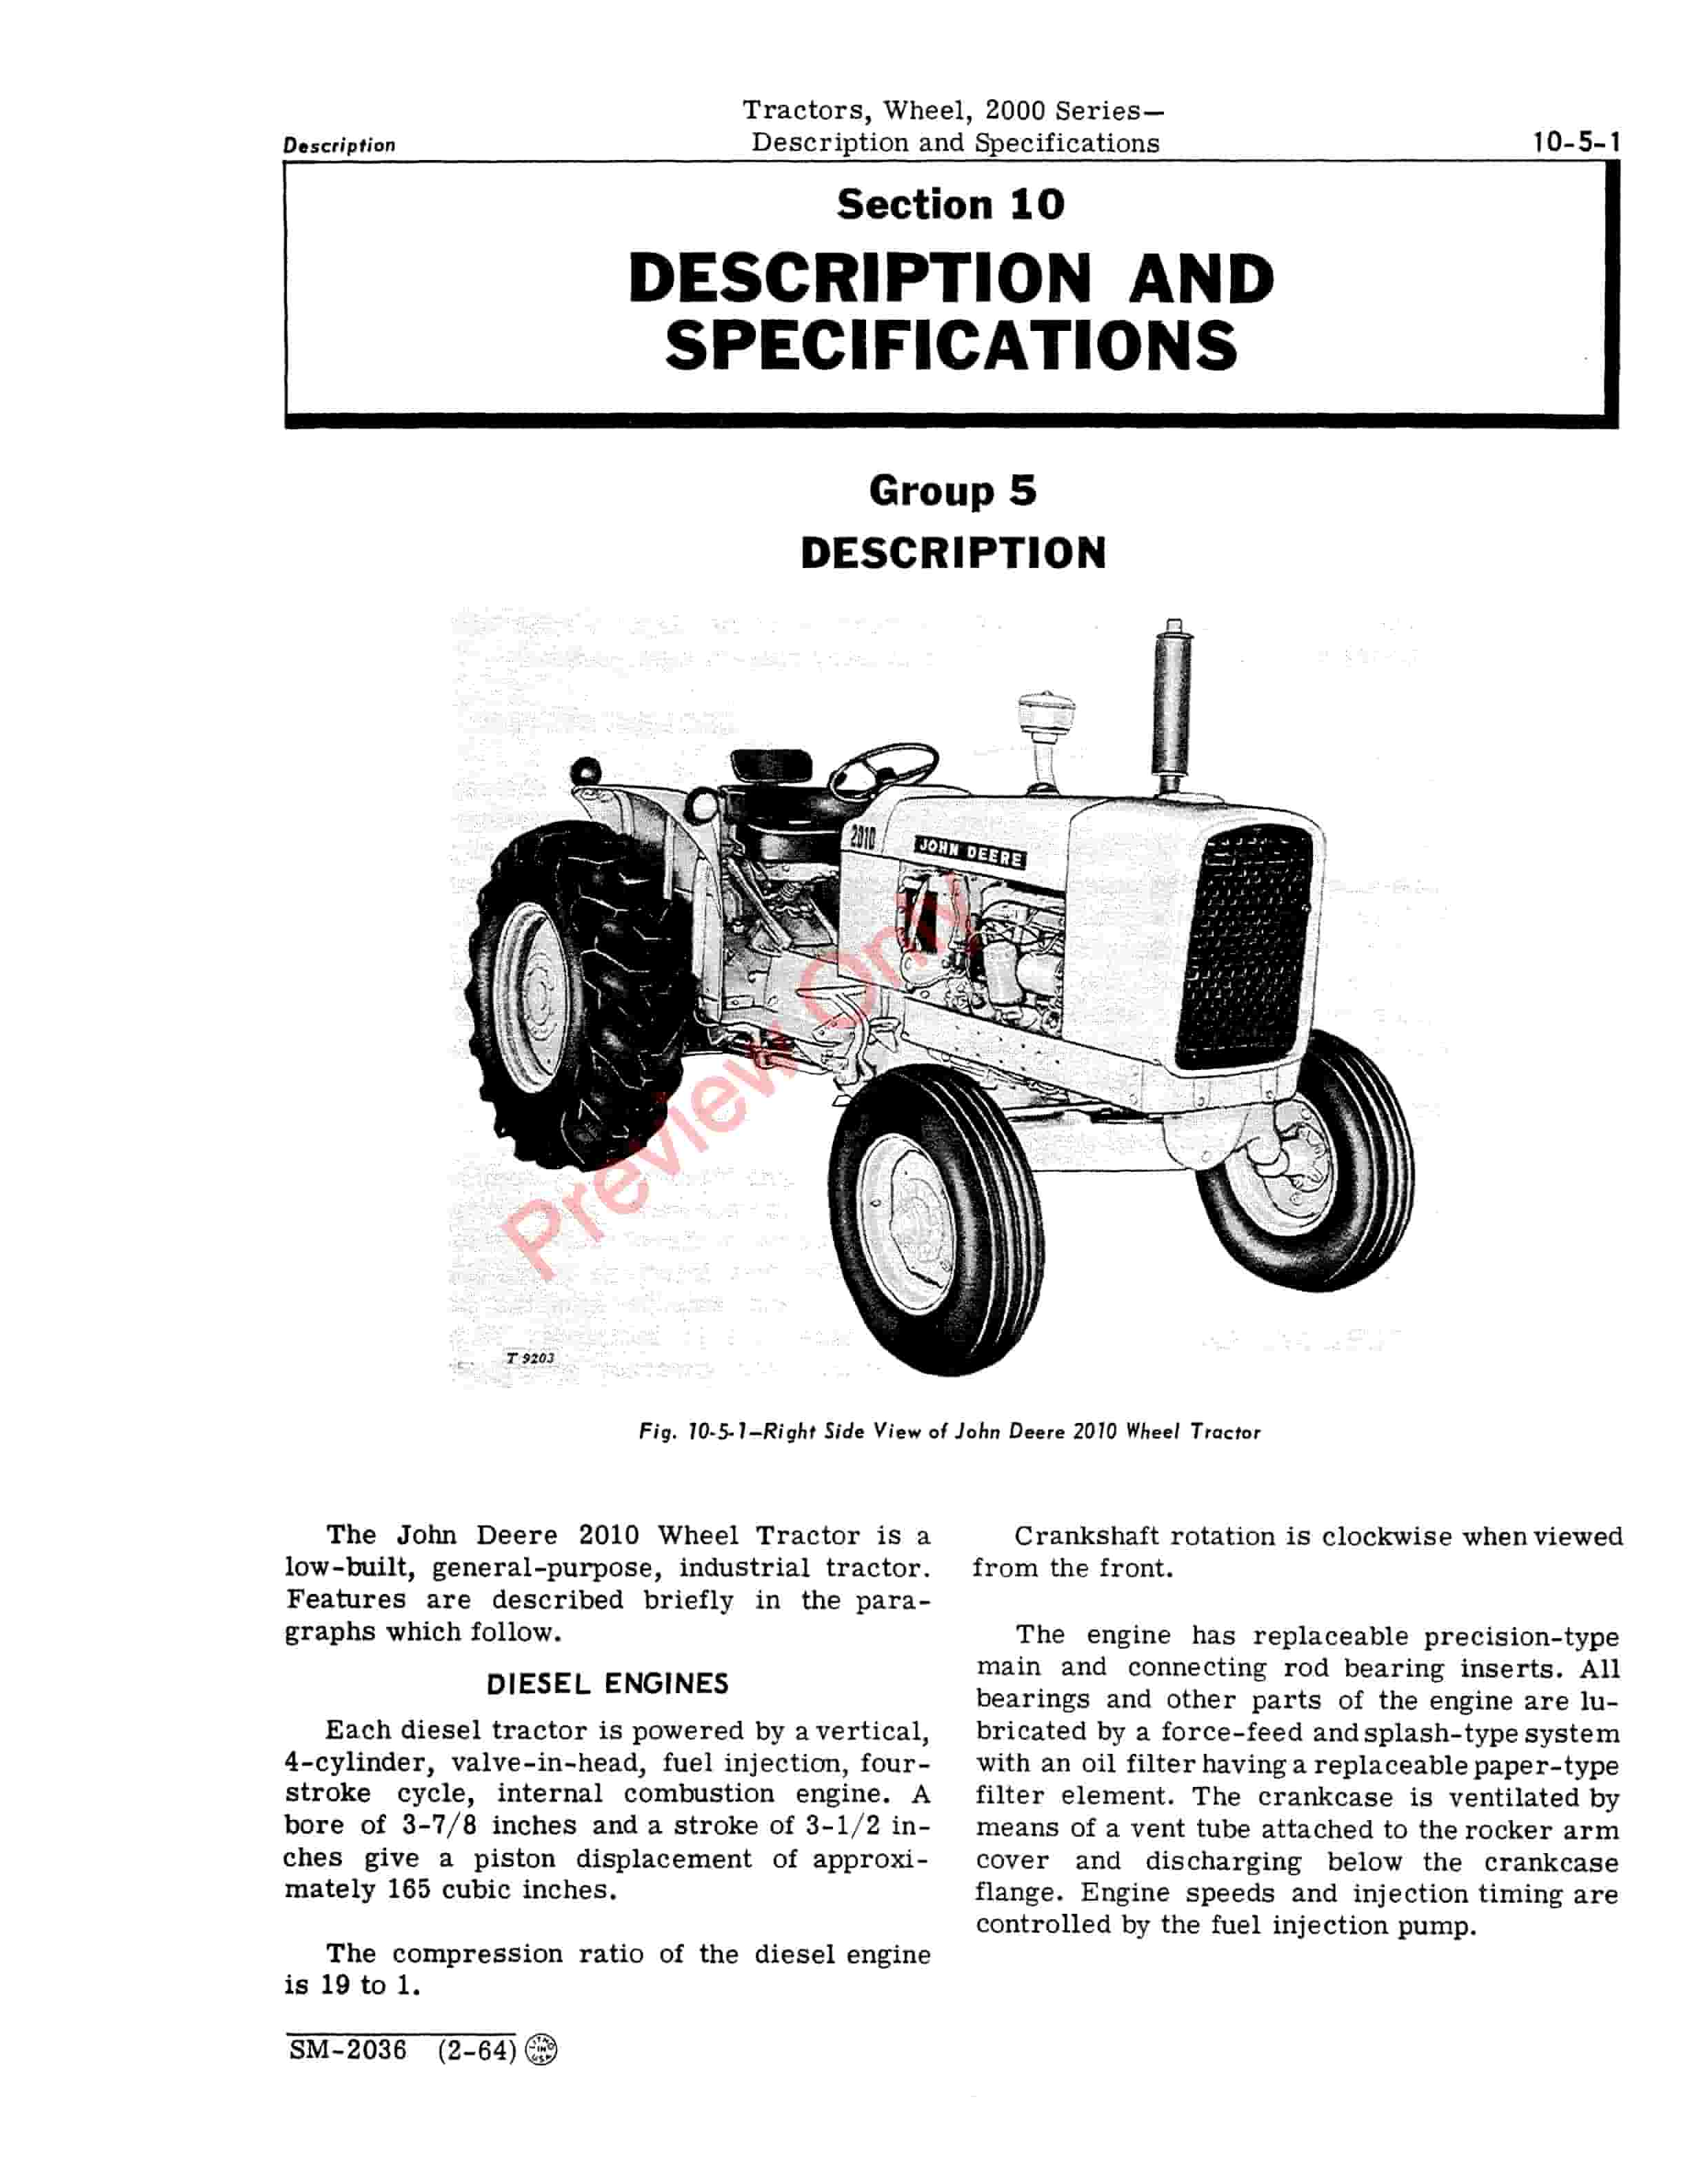 John Deere 2000 Series Tractors GasDiesel Service Manual SM2036 01FEB66 5